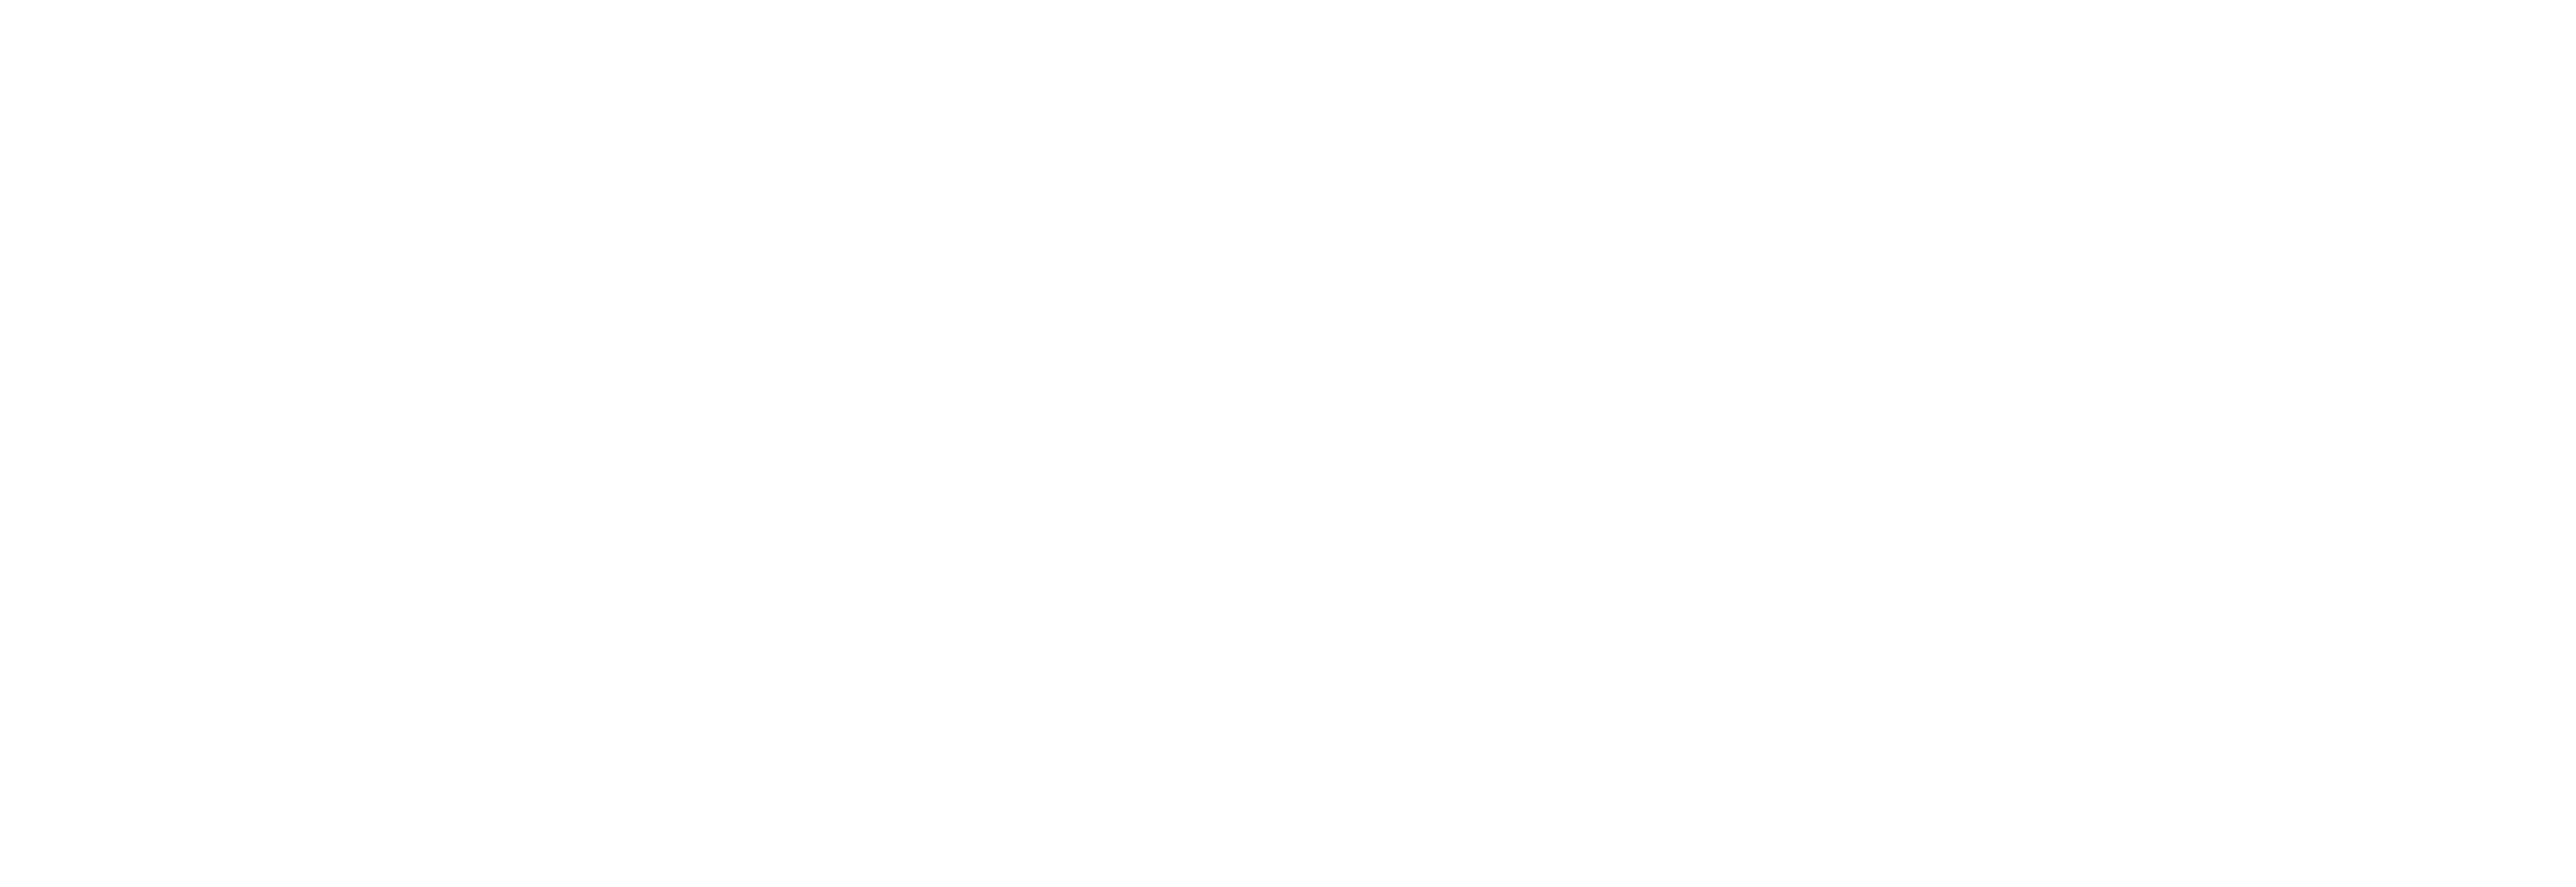 Arbaeen | Global Networking